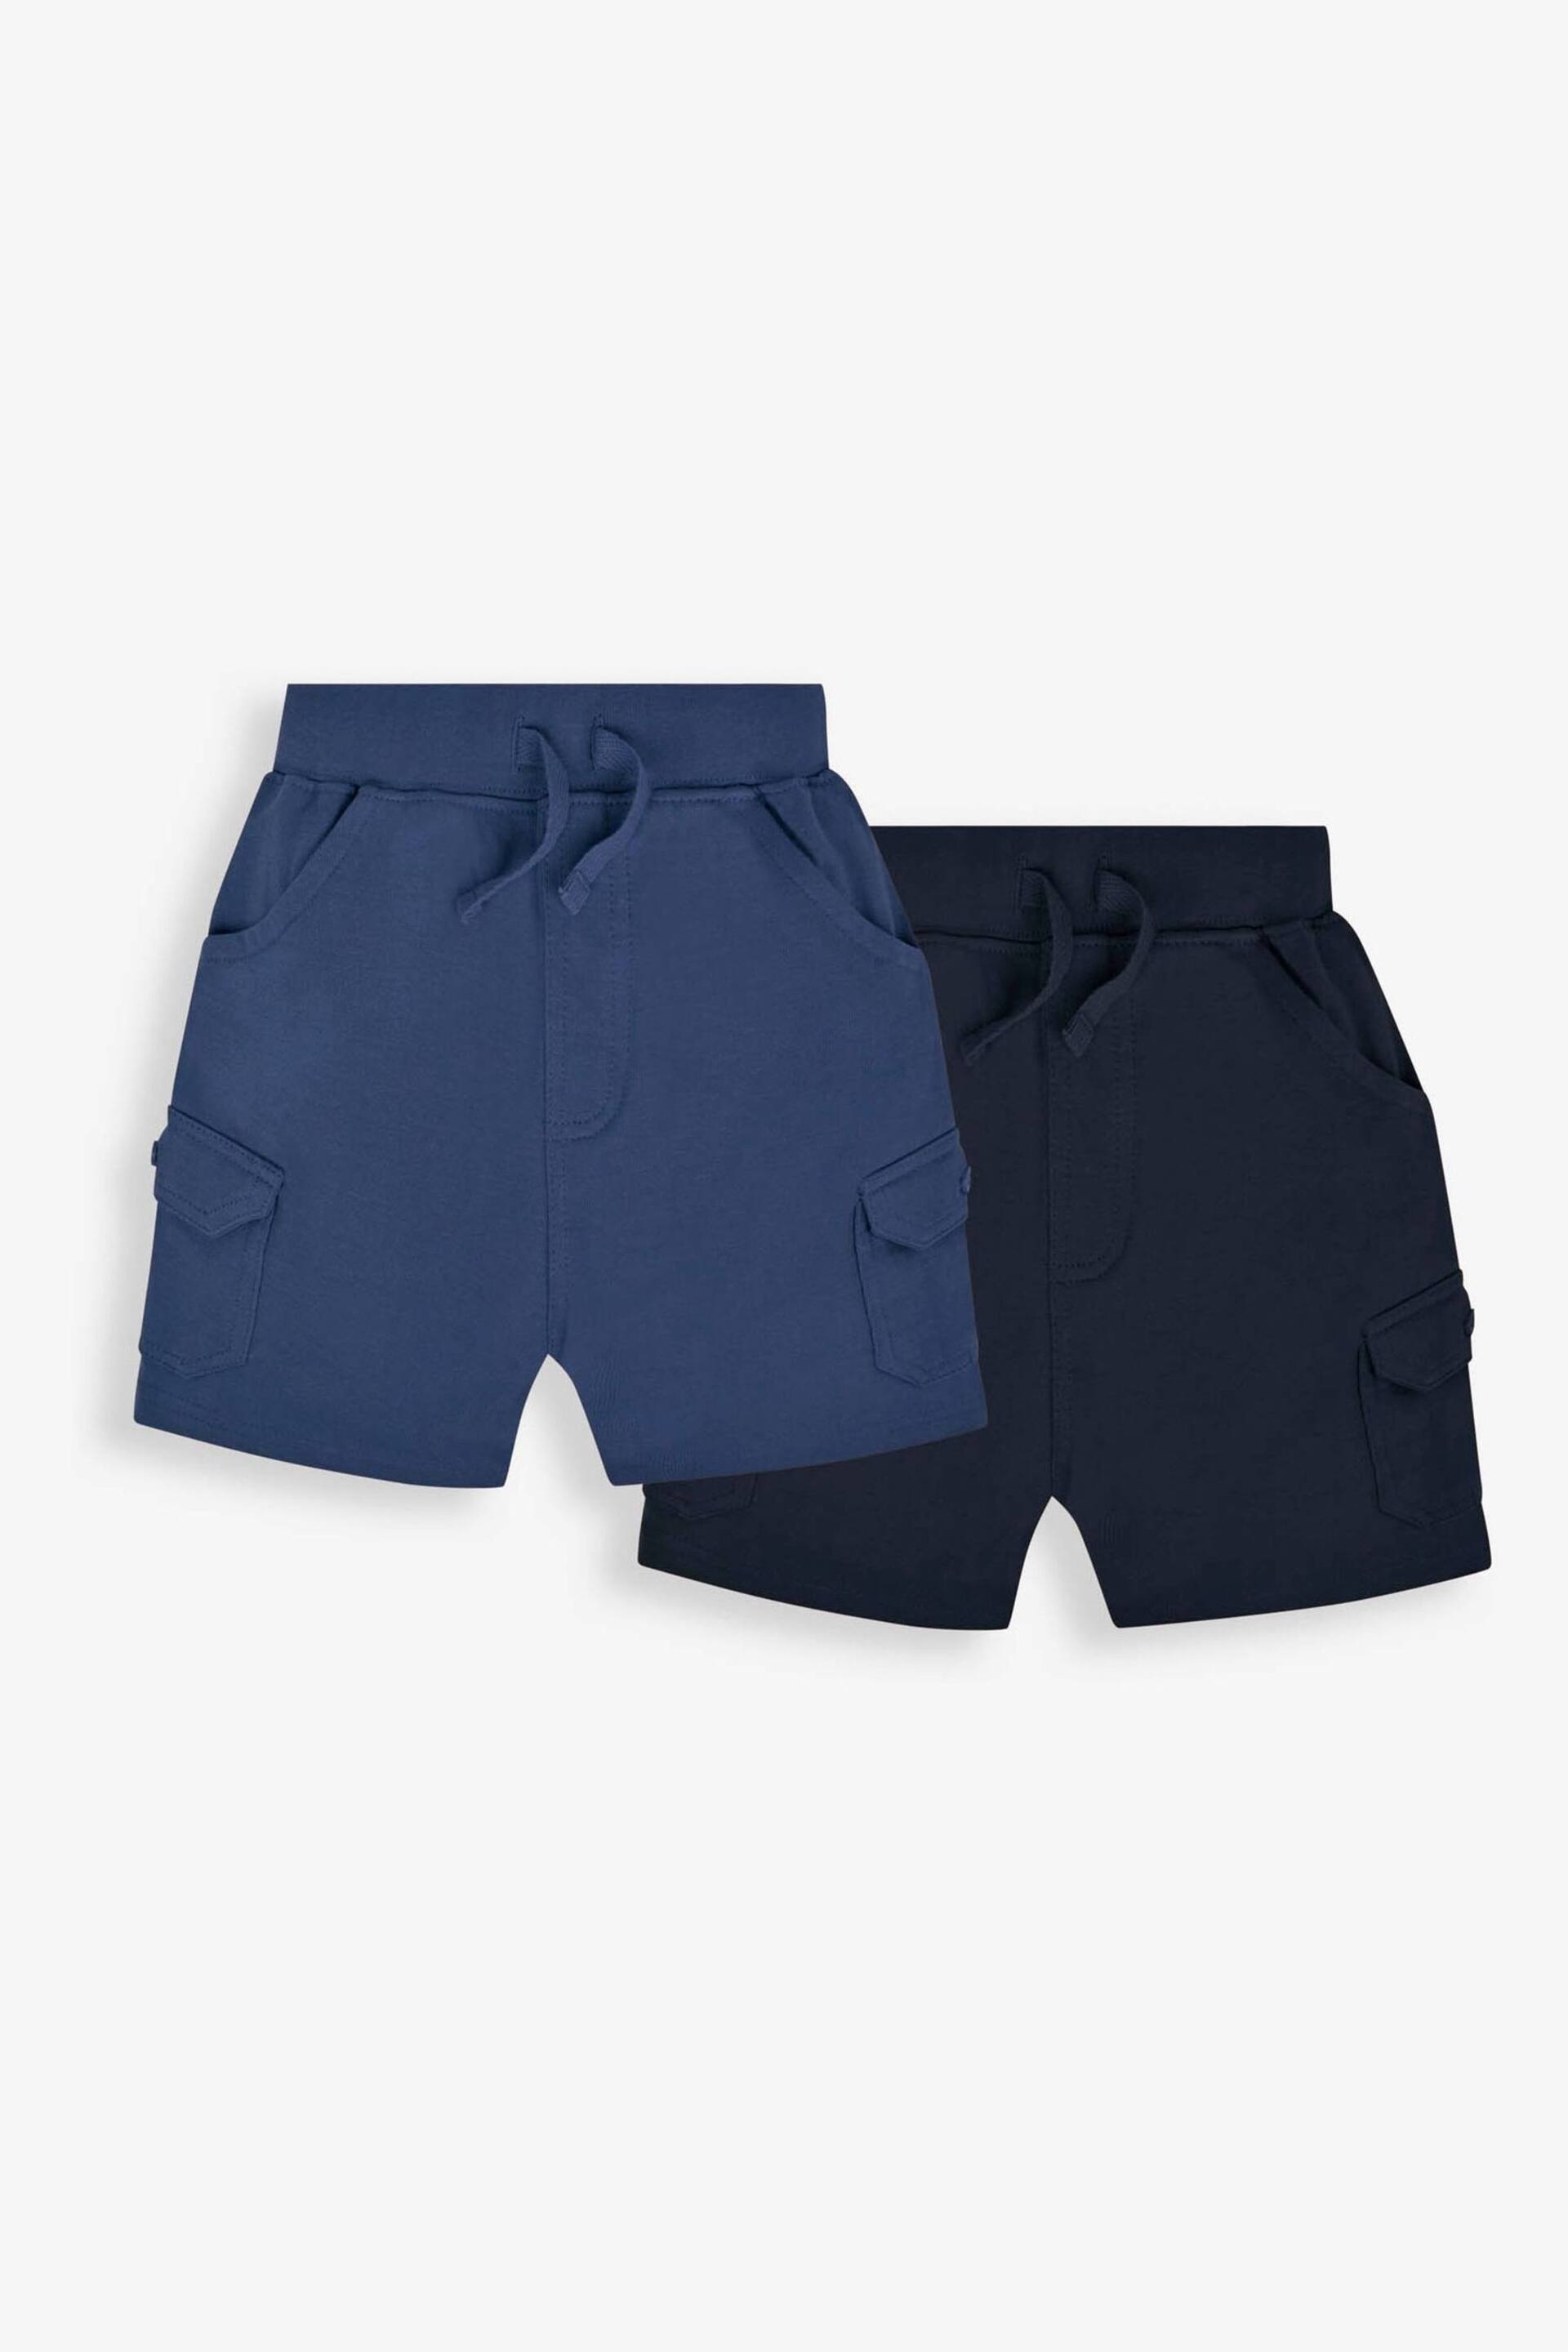 JoJo Maman Bébé Indigo Blue 2-Pack Jersey Cargo Shorts - Image 1 of 6